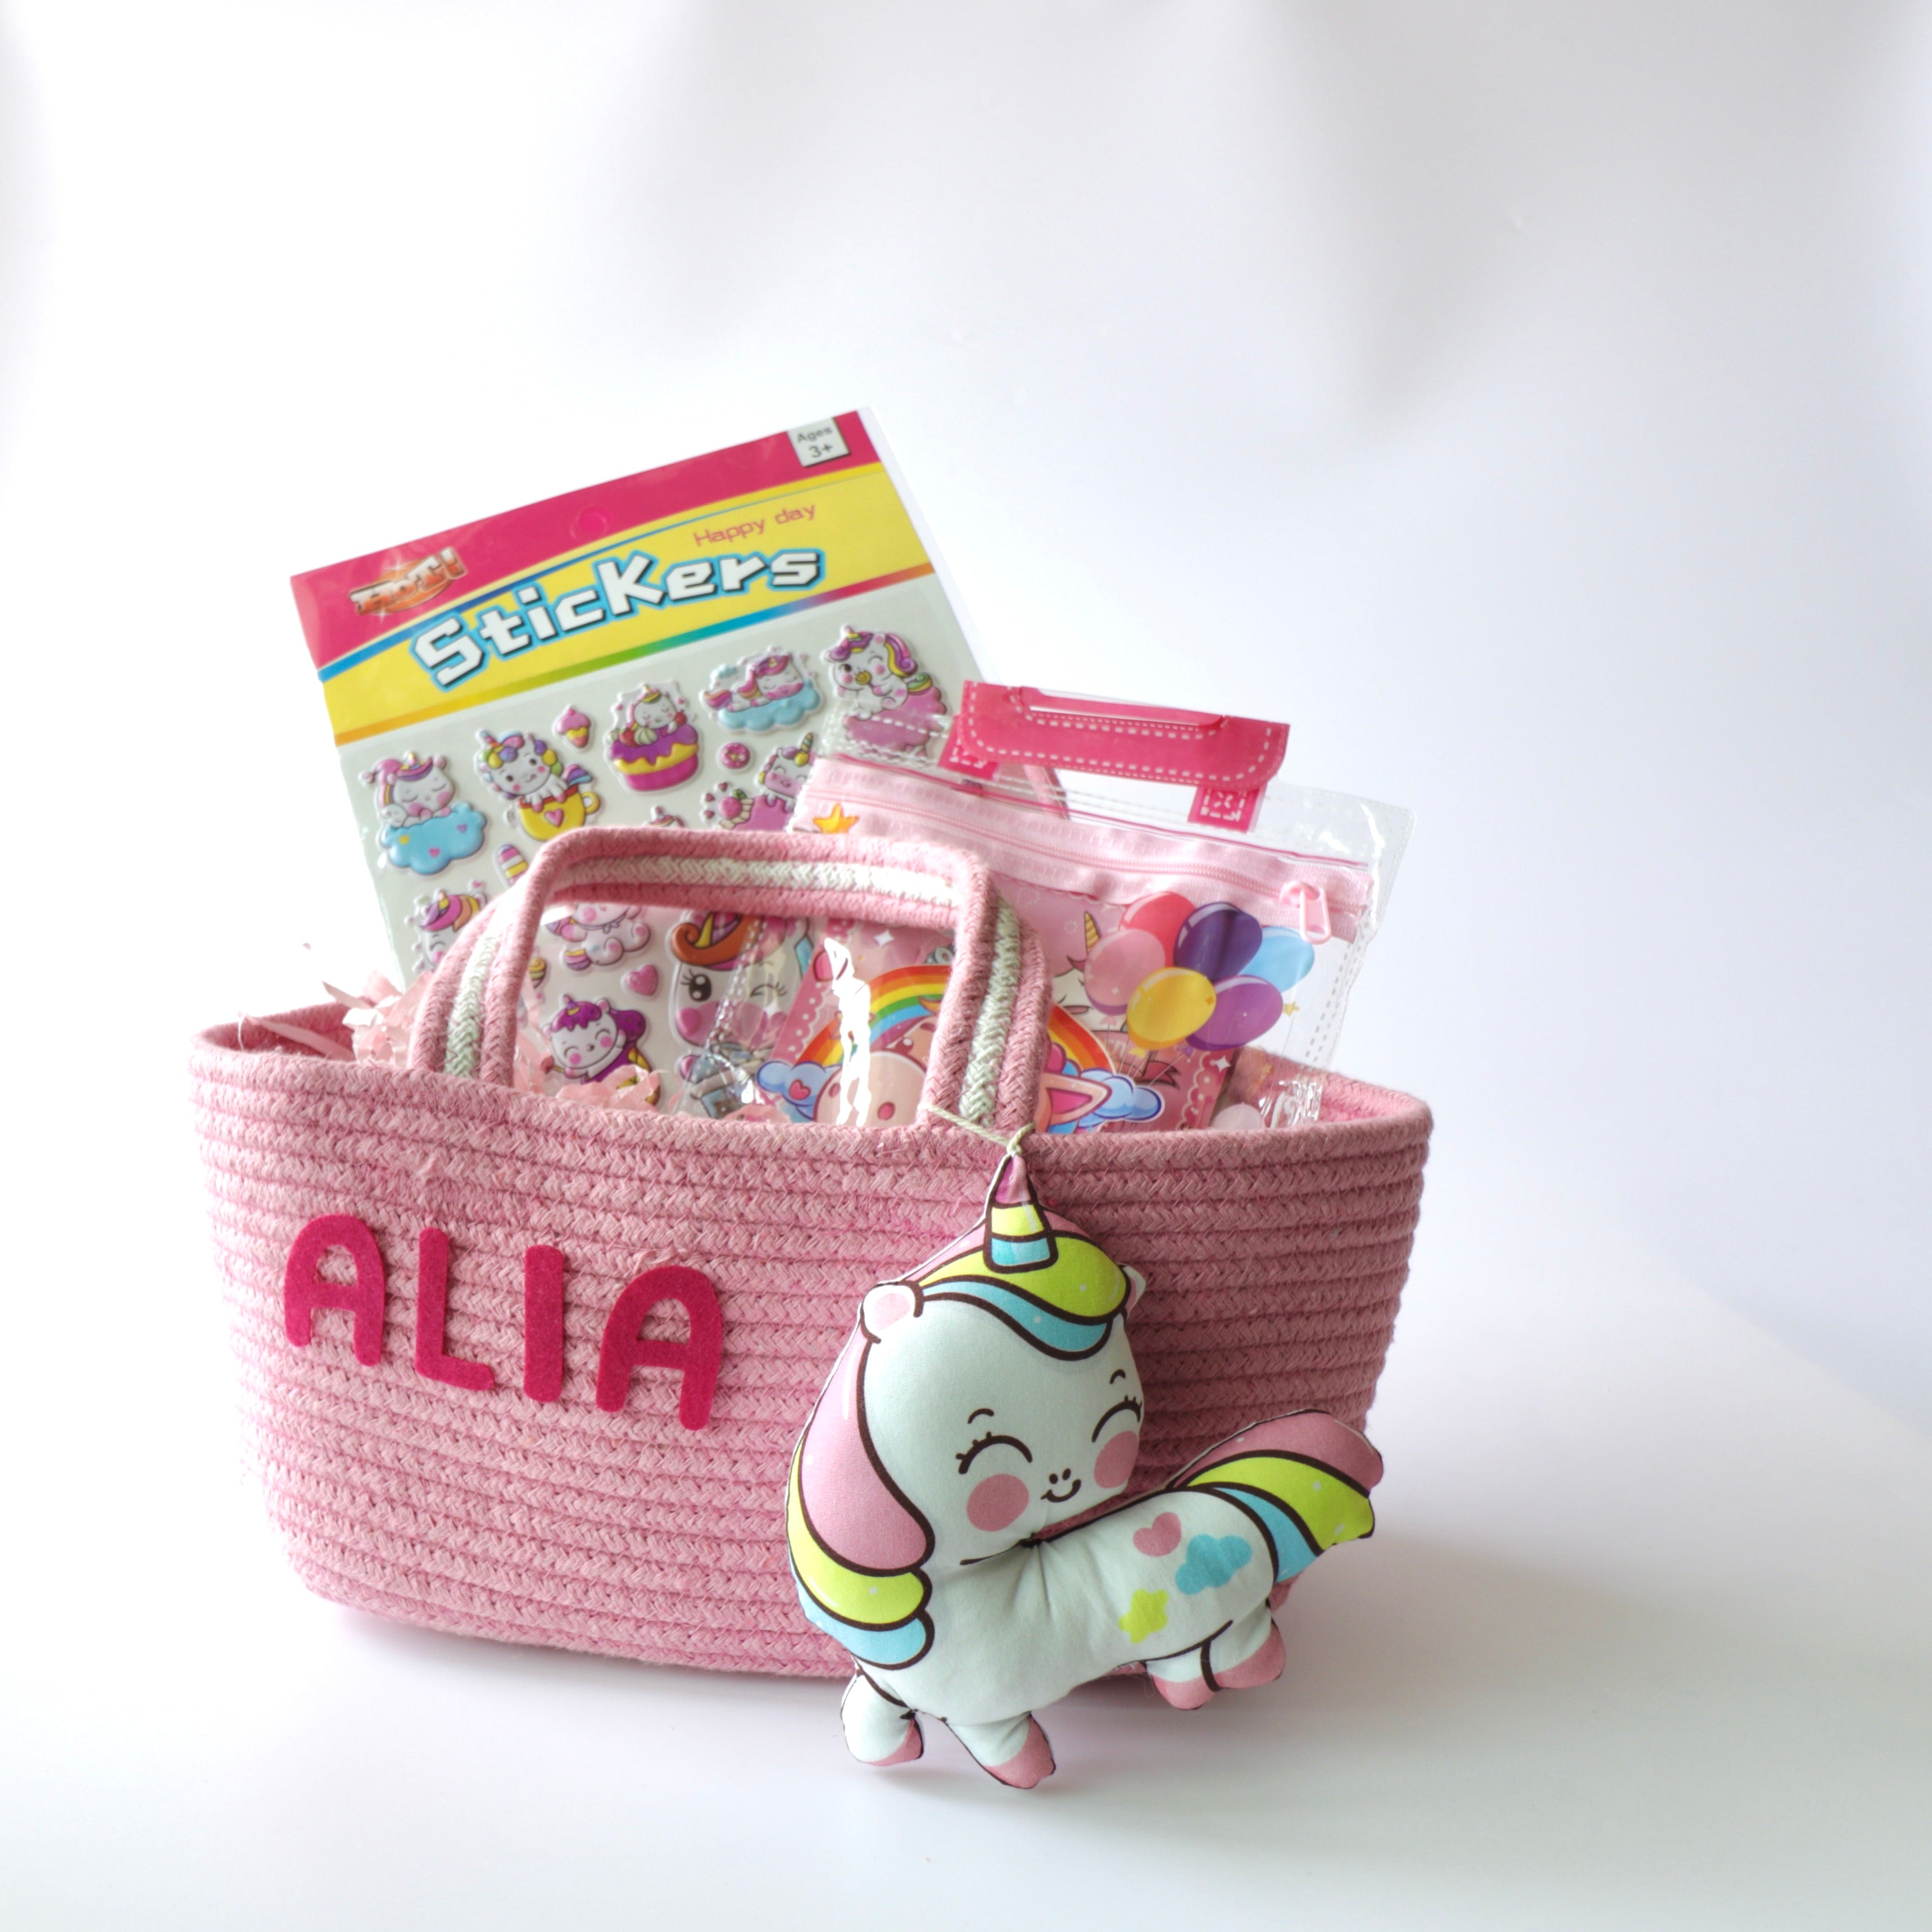 Cutie Stationary Gift Basket (Pink)